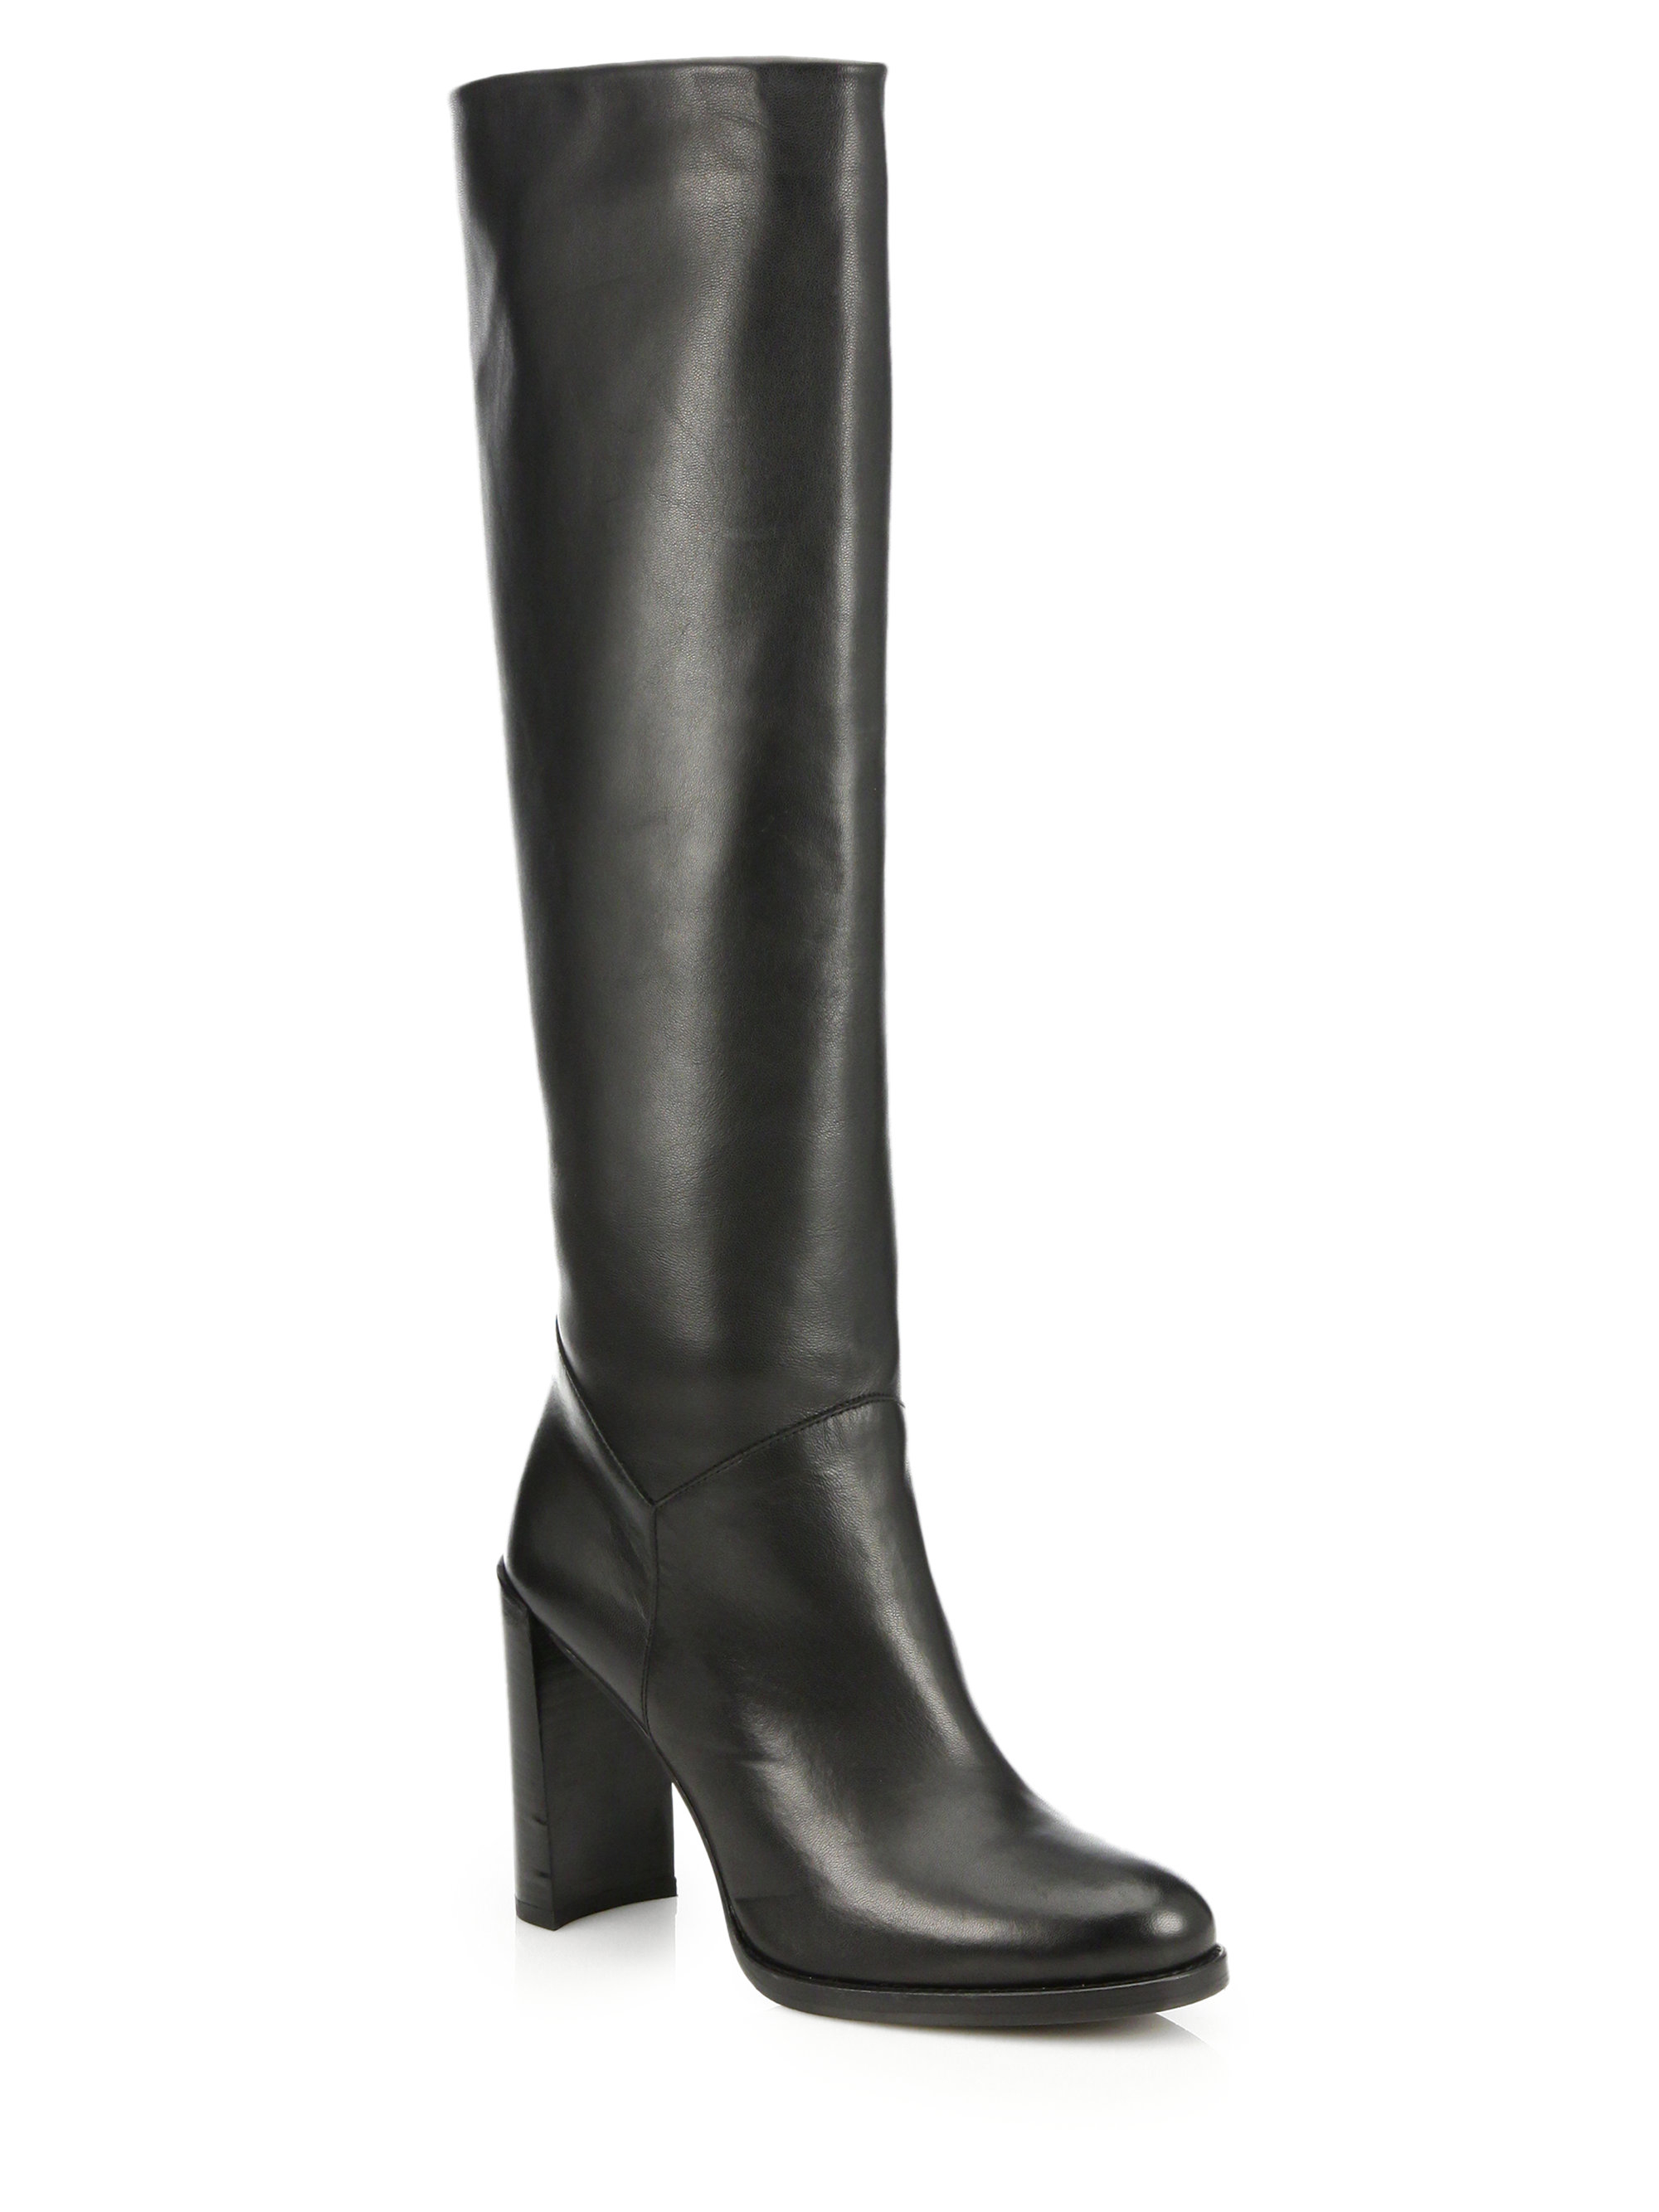 Lyst - Stuart Weitzman Napa Leather Knee-High Boots in Black